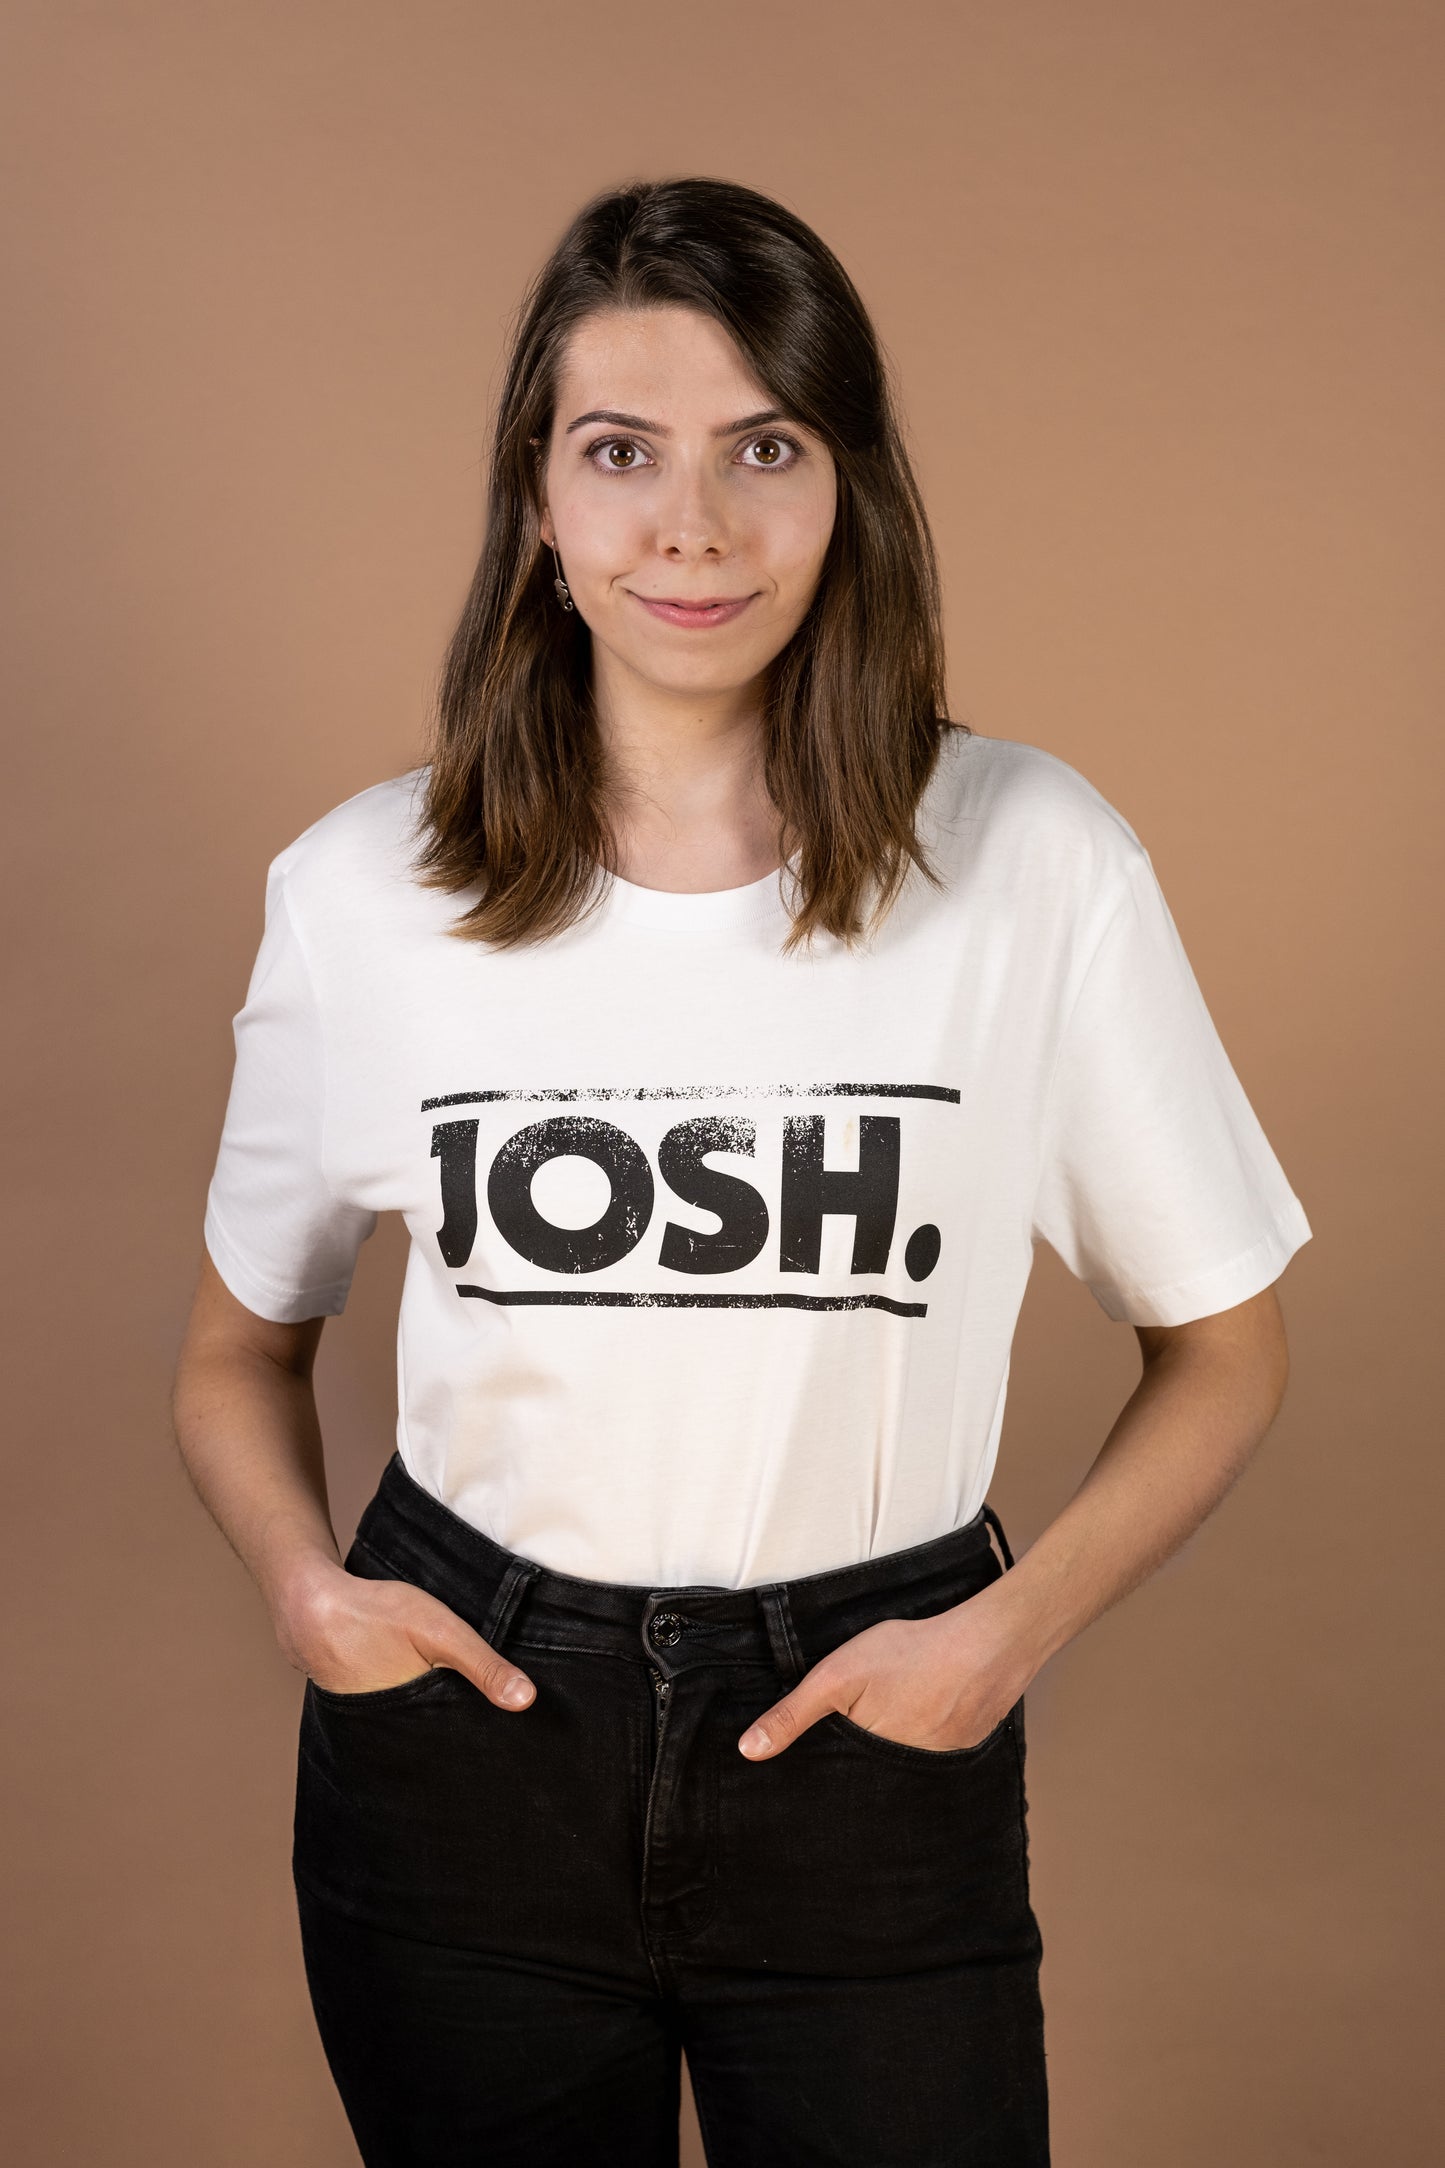 JOSH. Girlie-Shirt "Josh." (weiß)